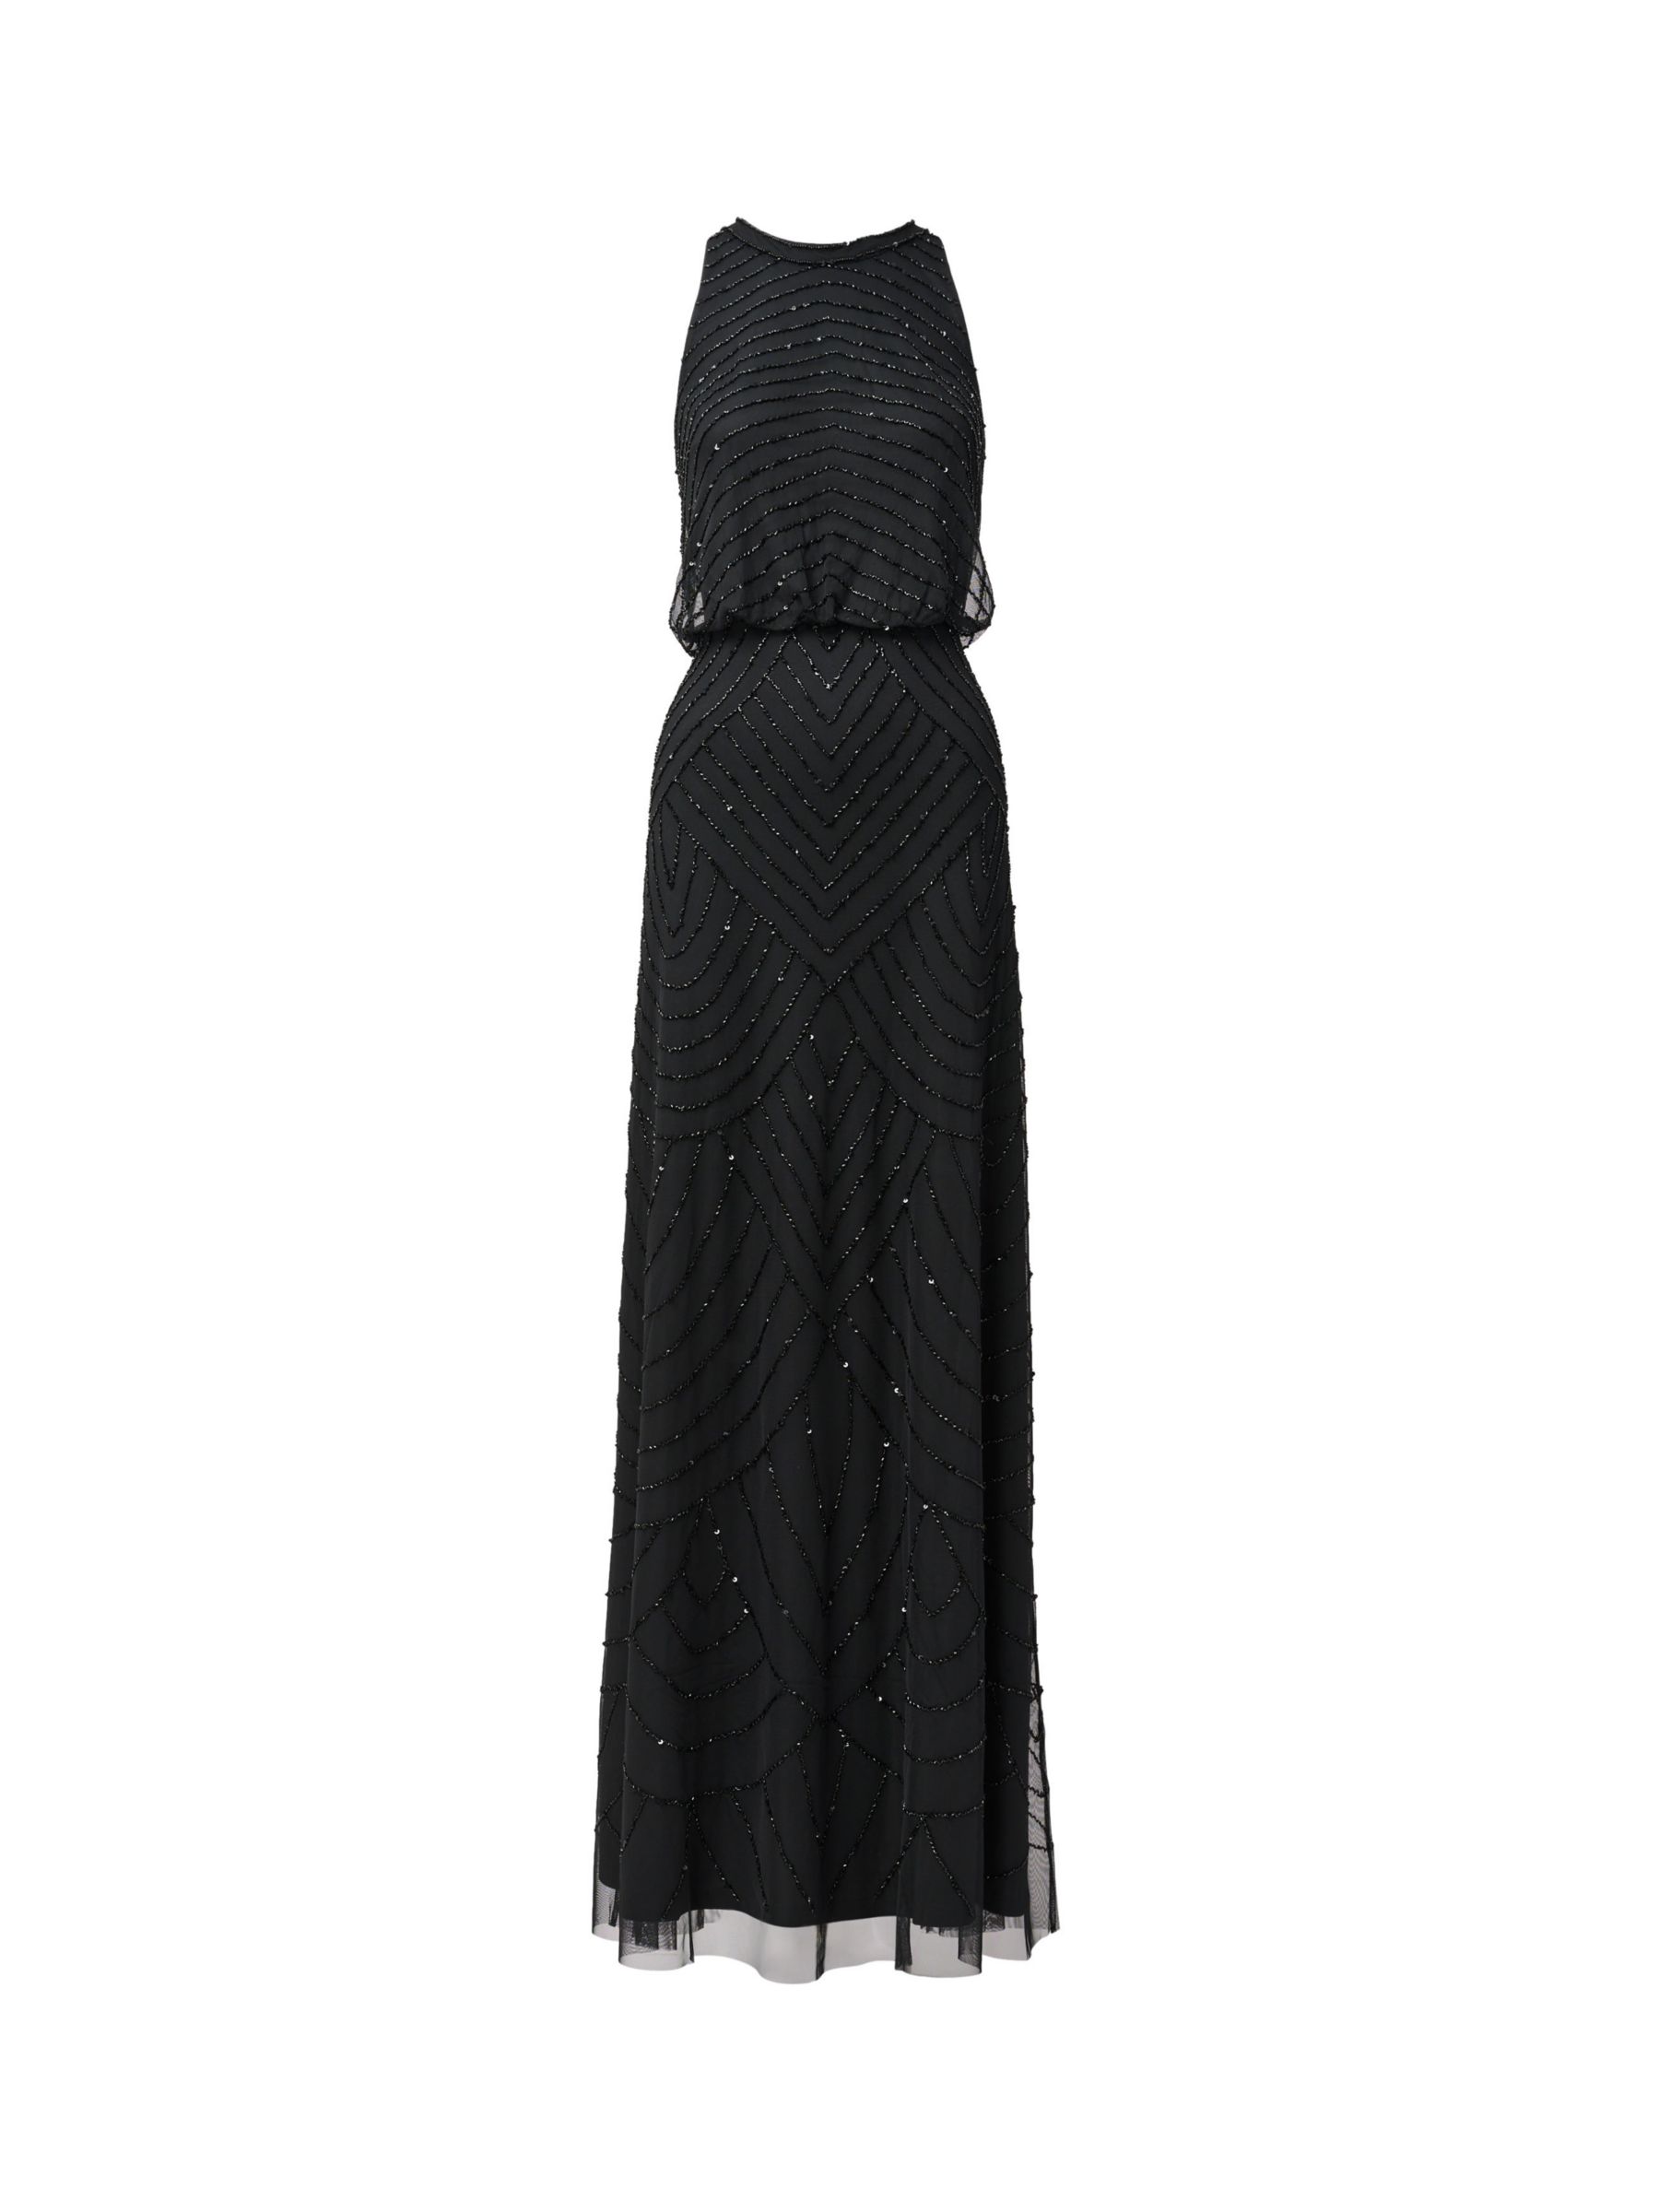 Adrianna Papell Beaded Halter Neck Evening Maxi Dress, Black, 6